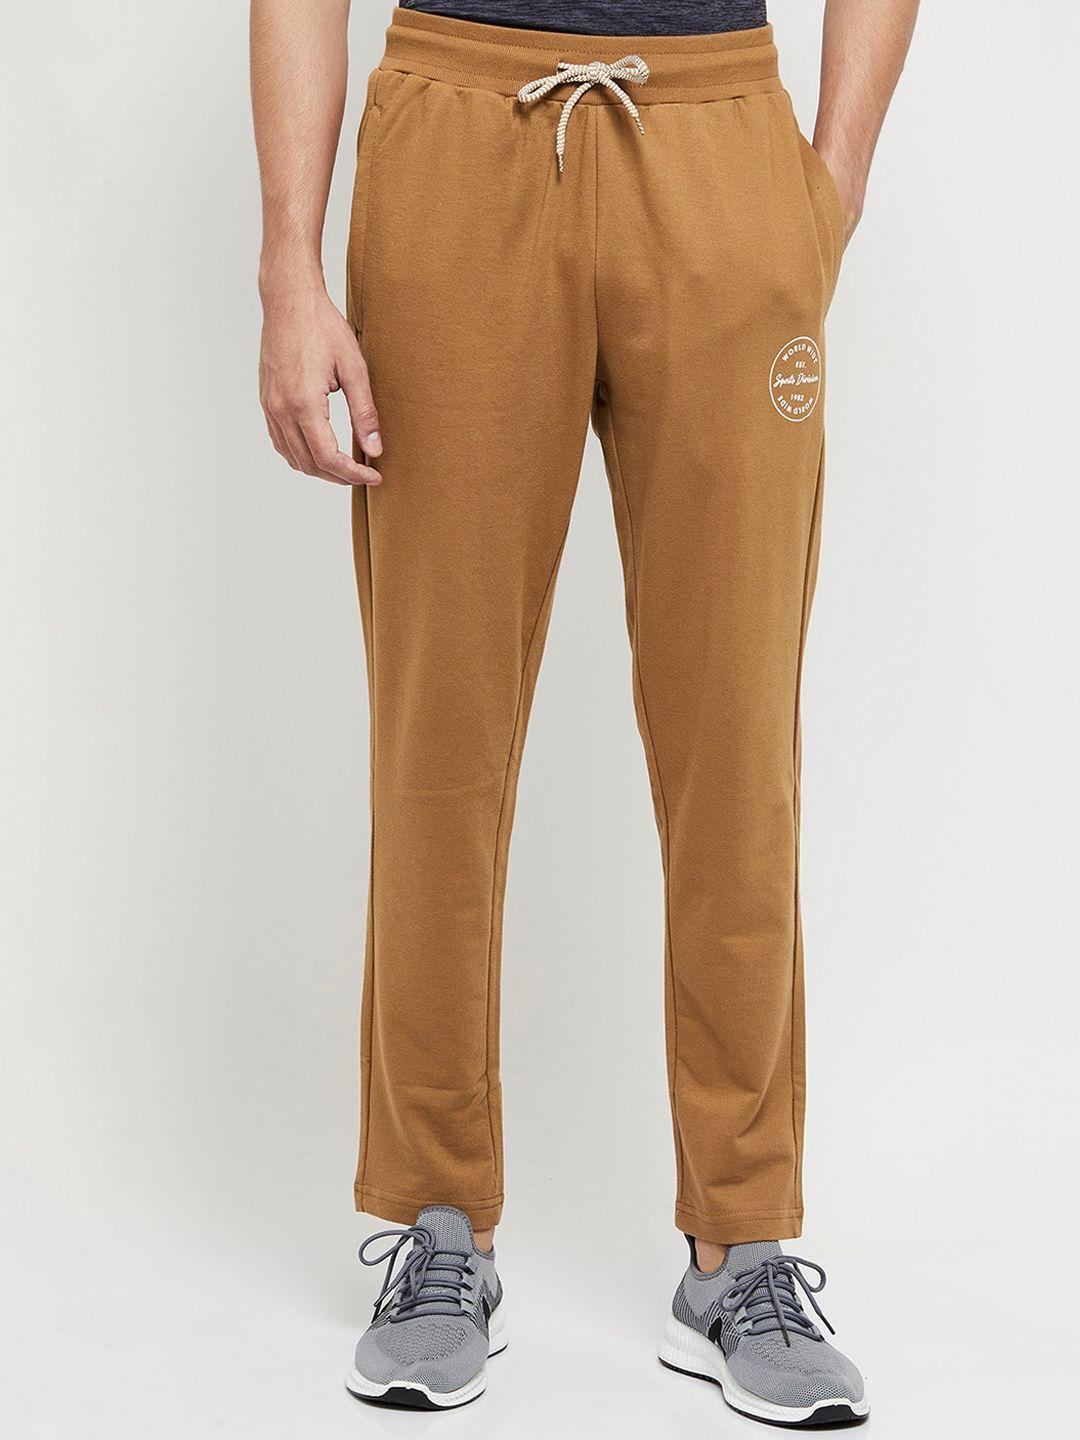 max-men-brown-&-white-printed-track-pants